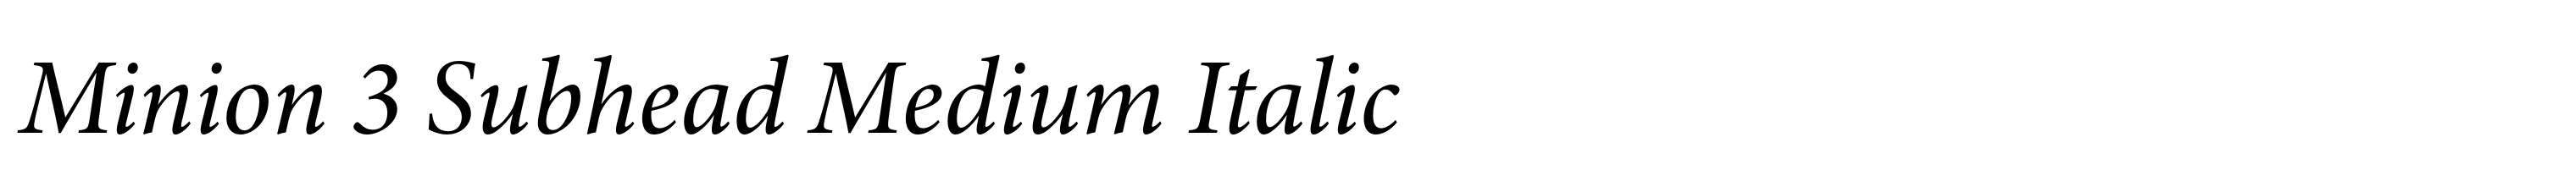 Minion 3 Subhead Medium Italic